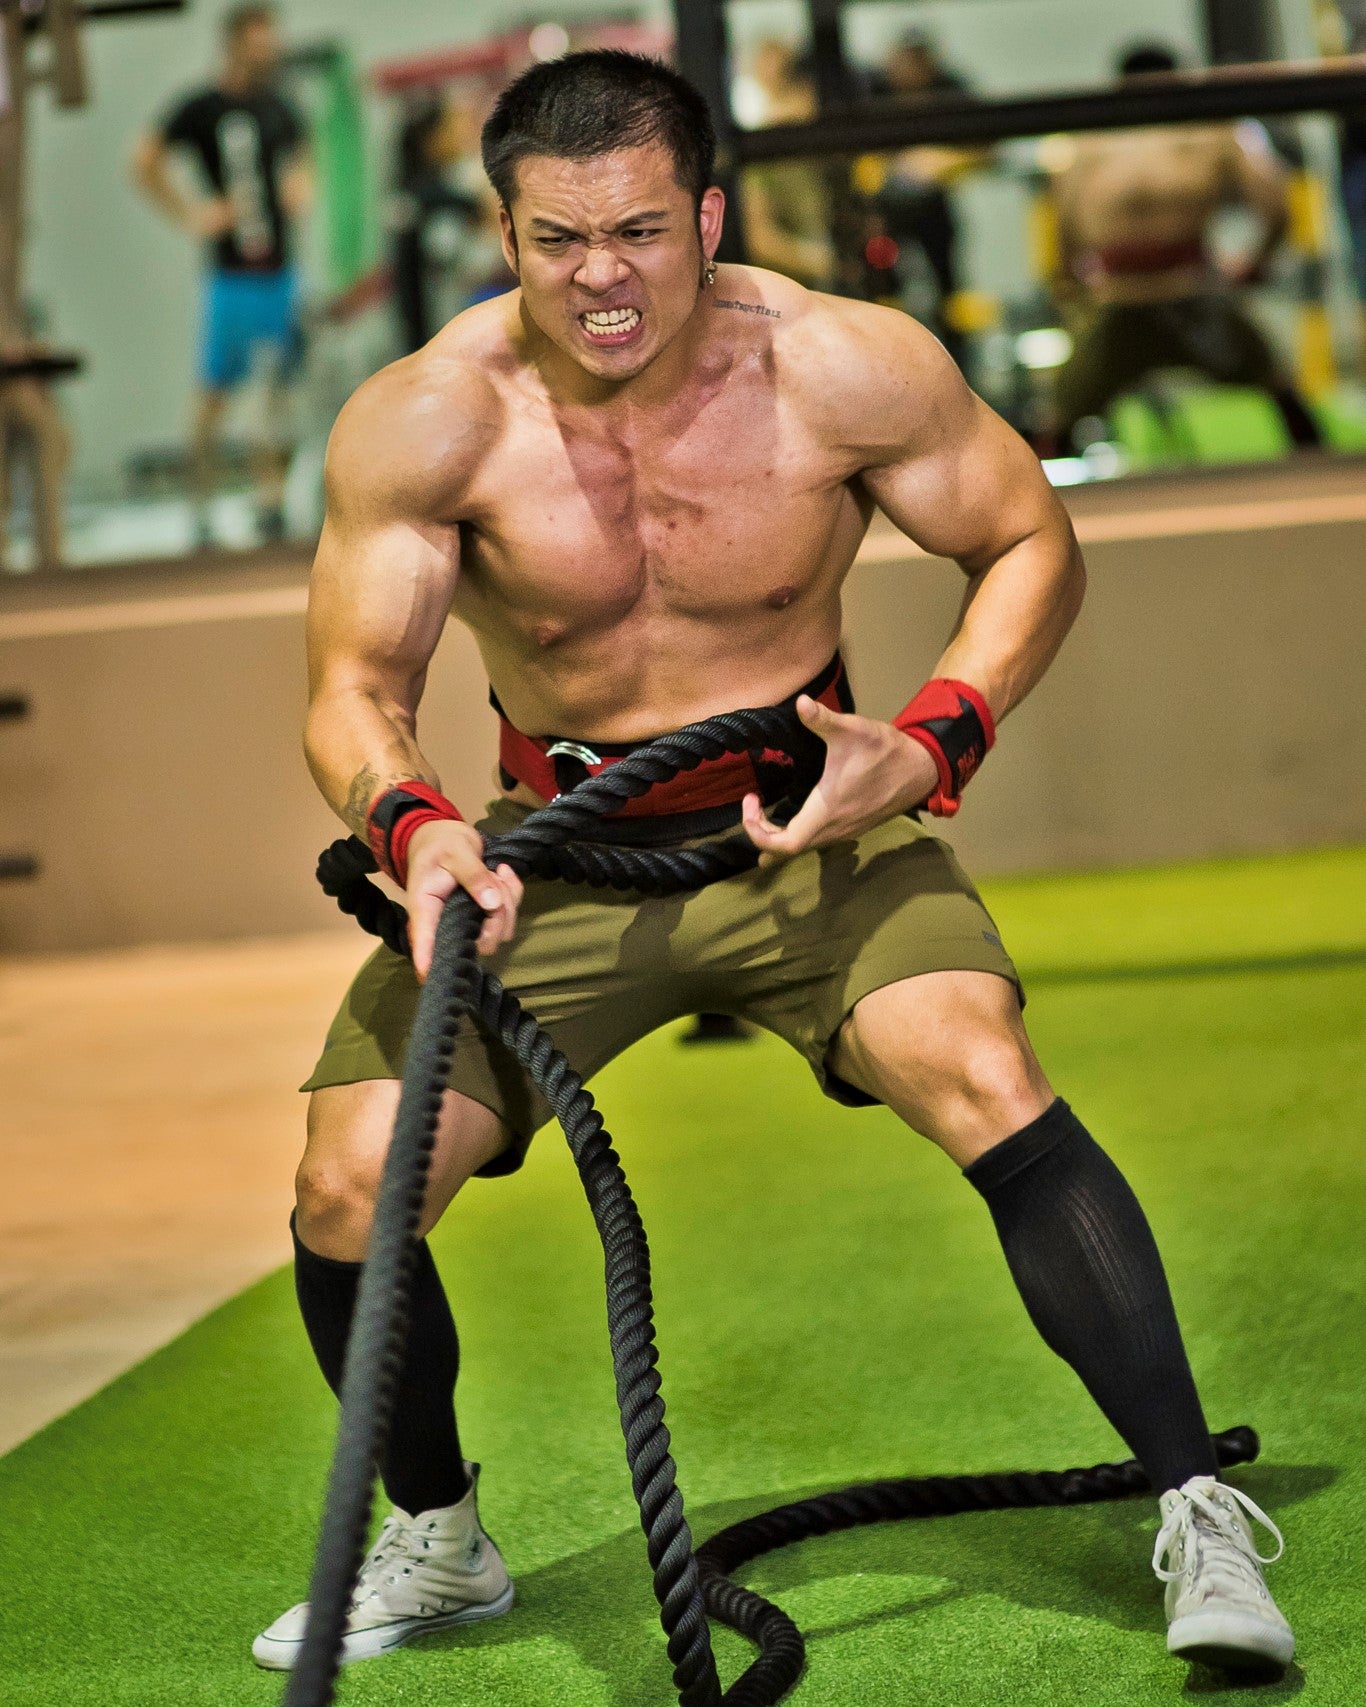 Battle Rope - Bench Fitness Equipment